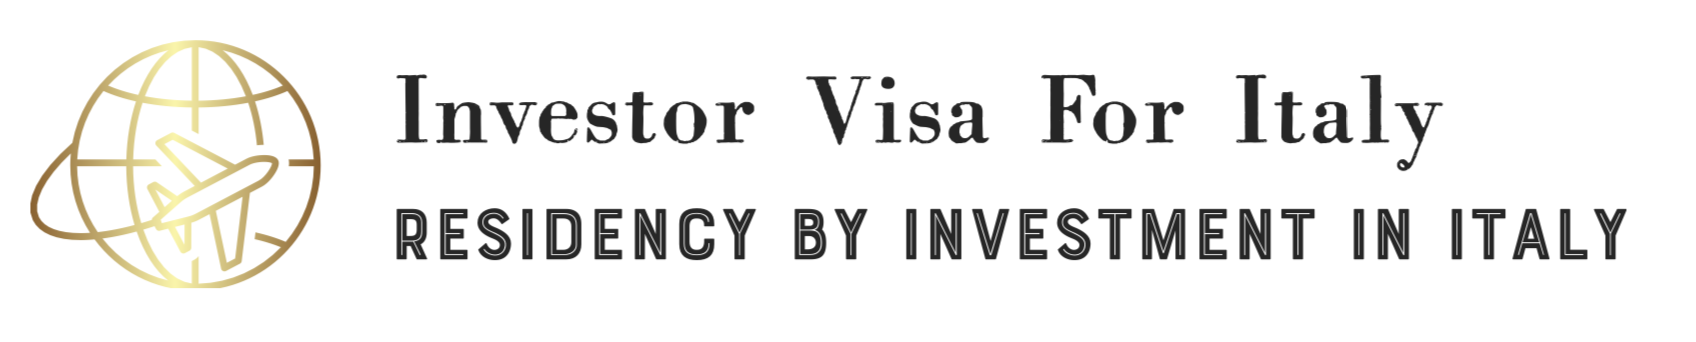 investor-visa-for-italy-logohd